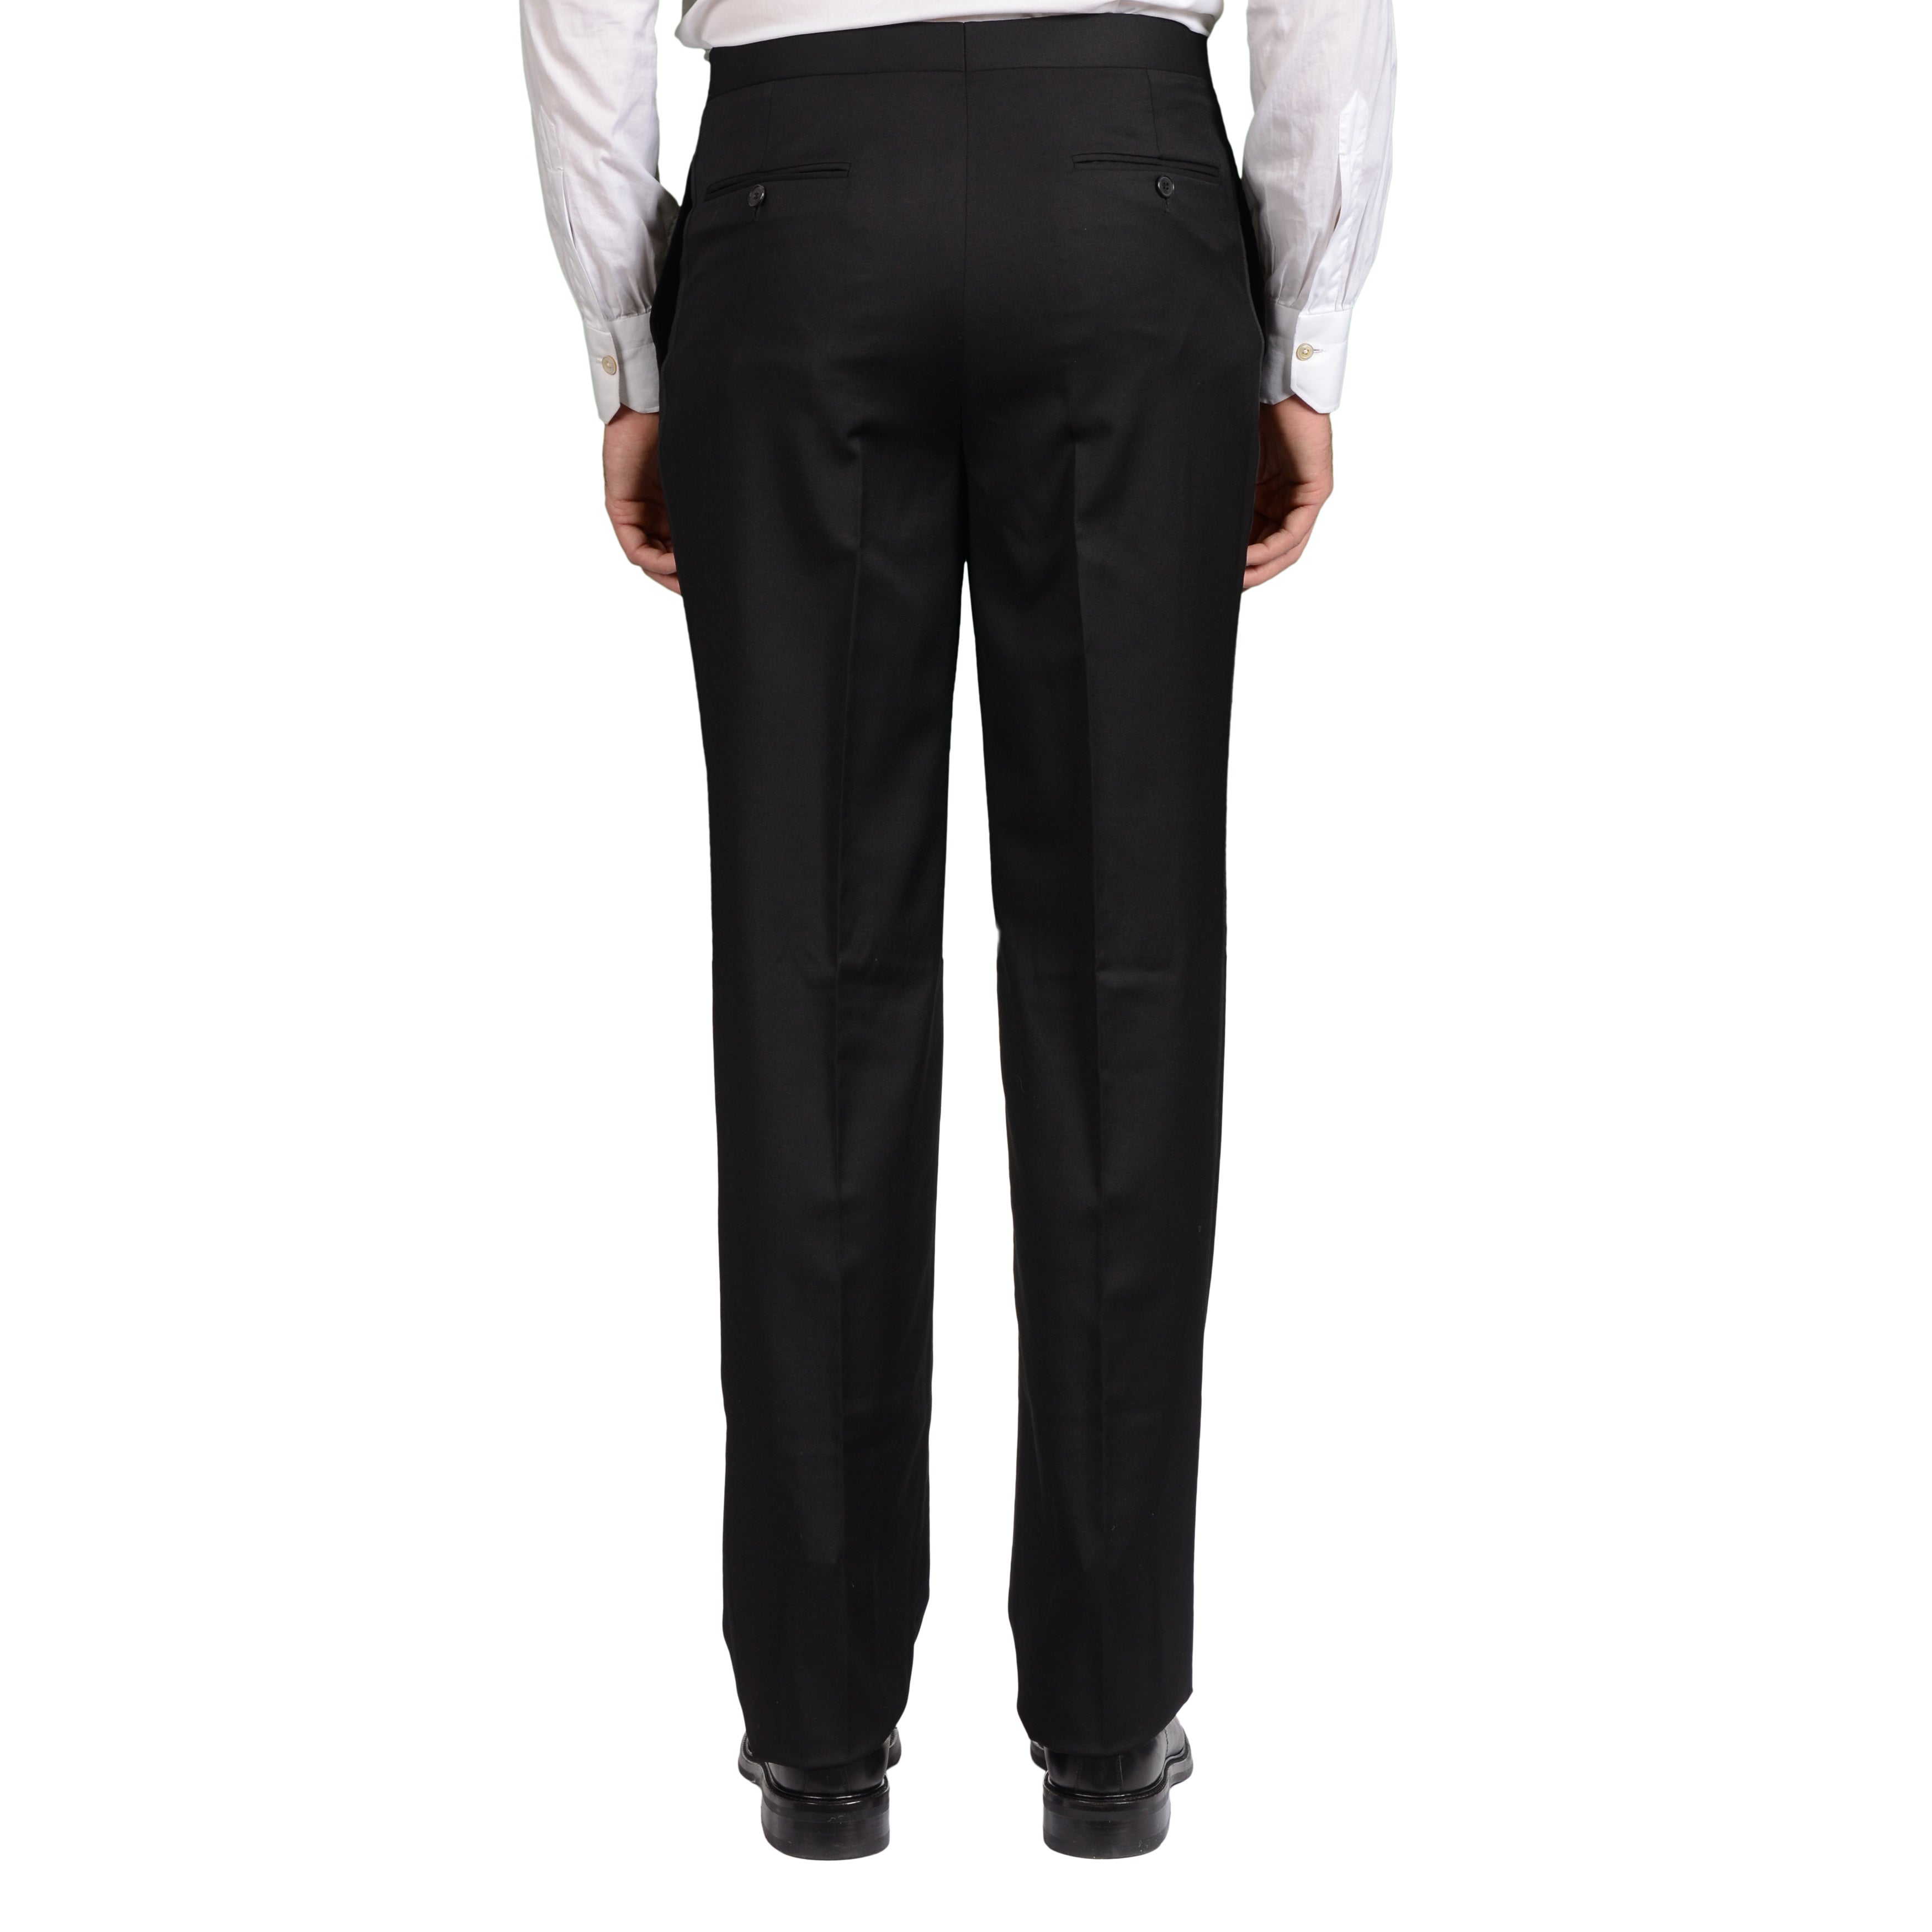 GARY ANDERSON Handmade Black Wool SP Tuxedo Dress Pants EU 50 NEW US 34